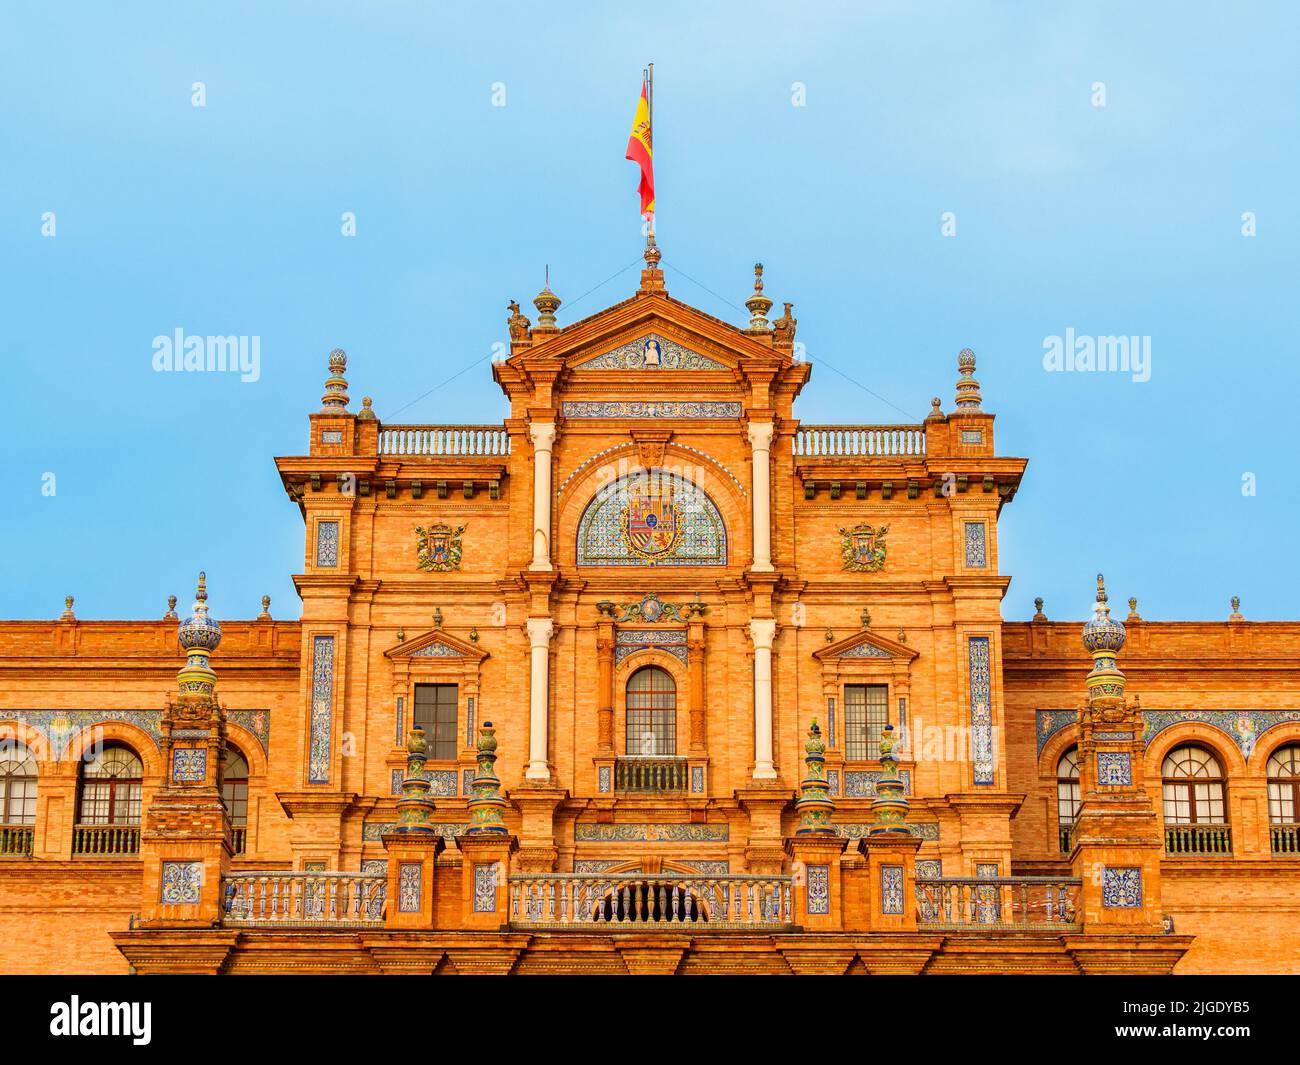 Decorated with azulejos facade at Palacio Espanol in Plaza de Espana (Spain Square) in Seville - Andalusia, Spain Stock Photo